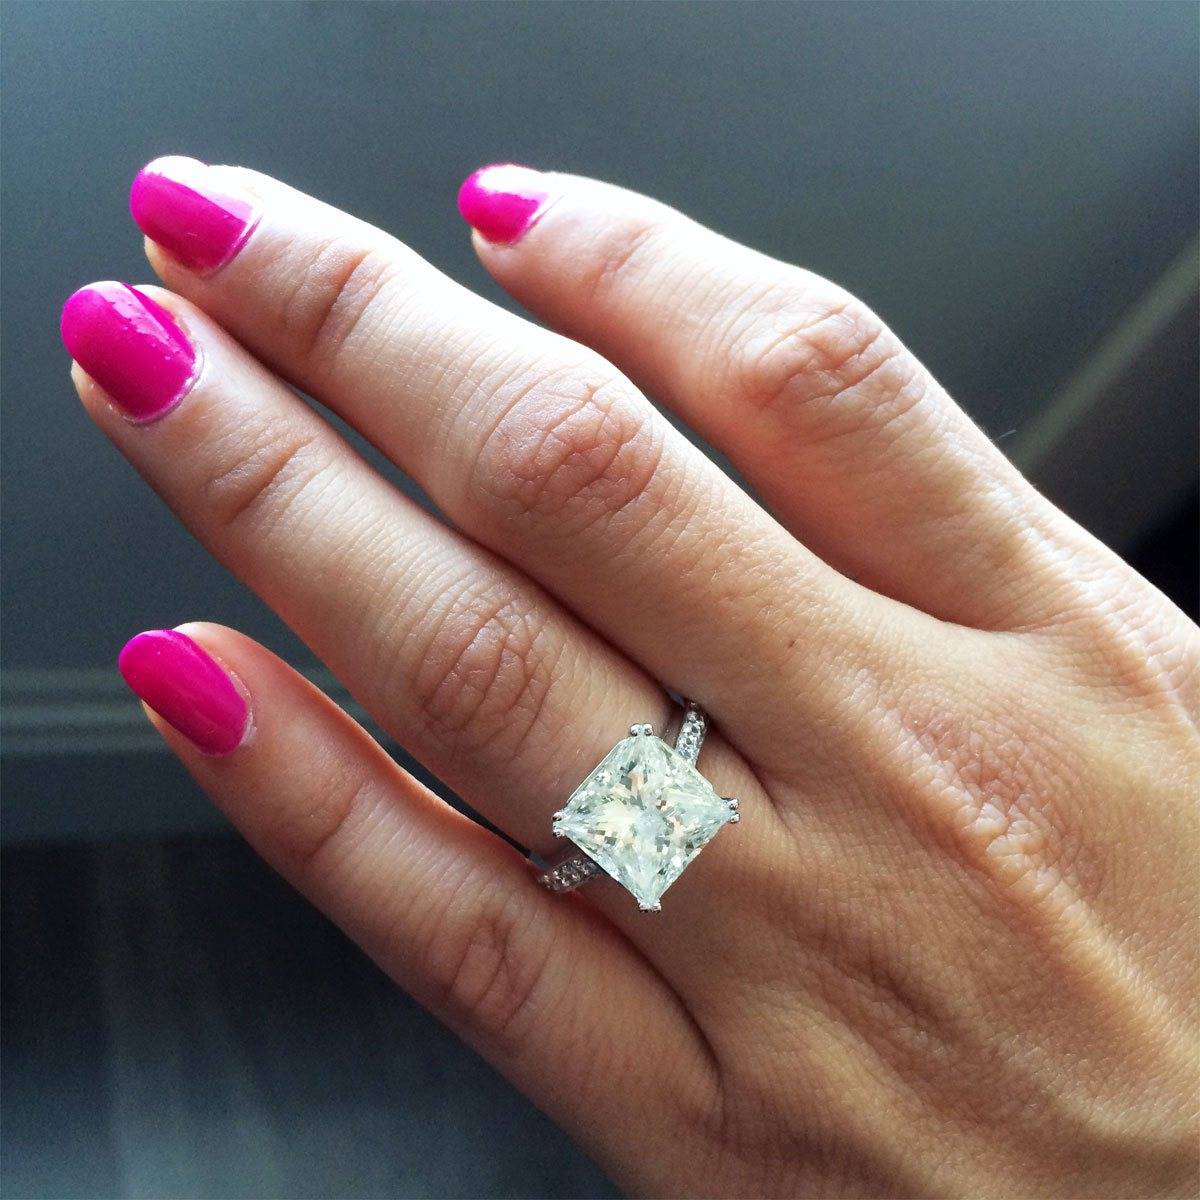 Raymond Lee Jewelers Engagement Rings